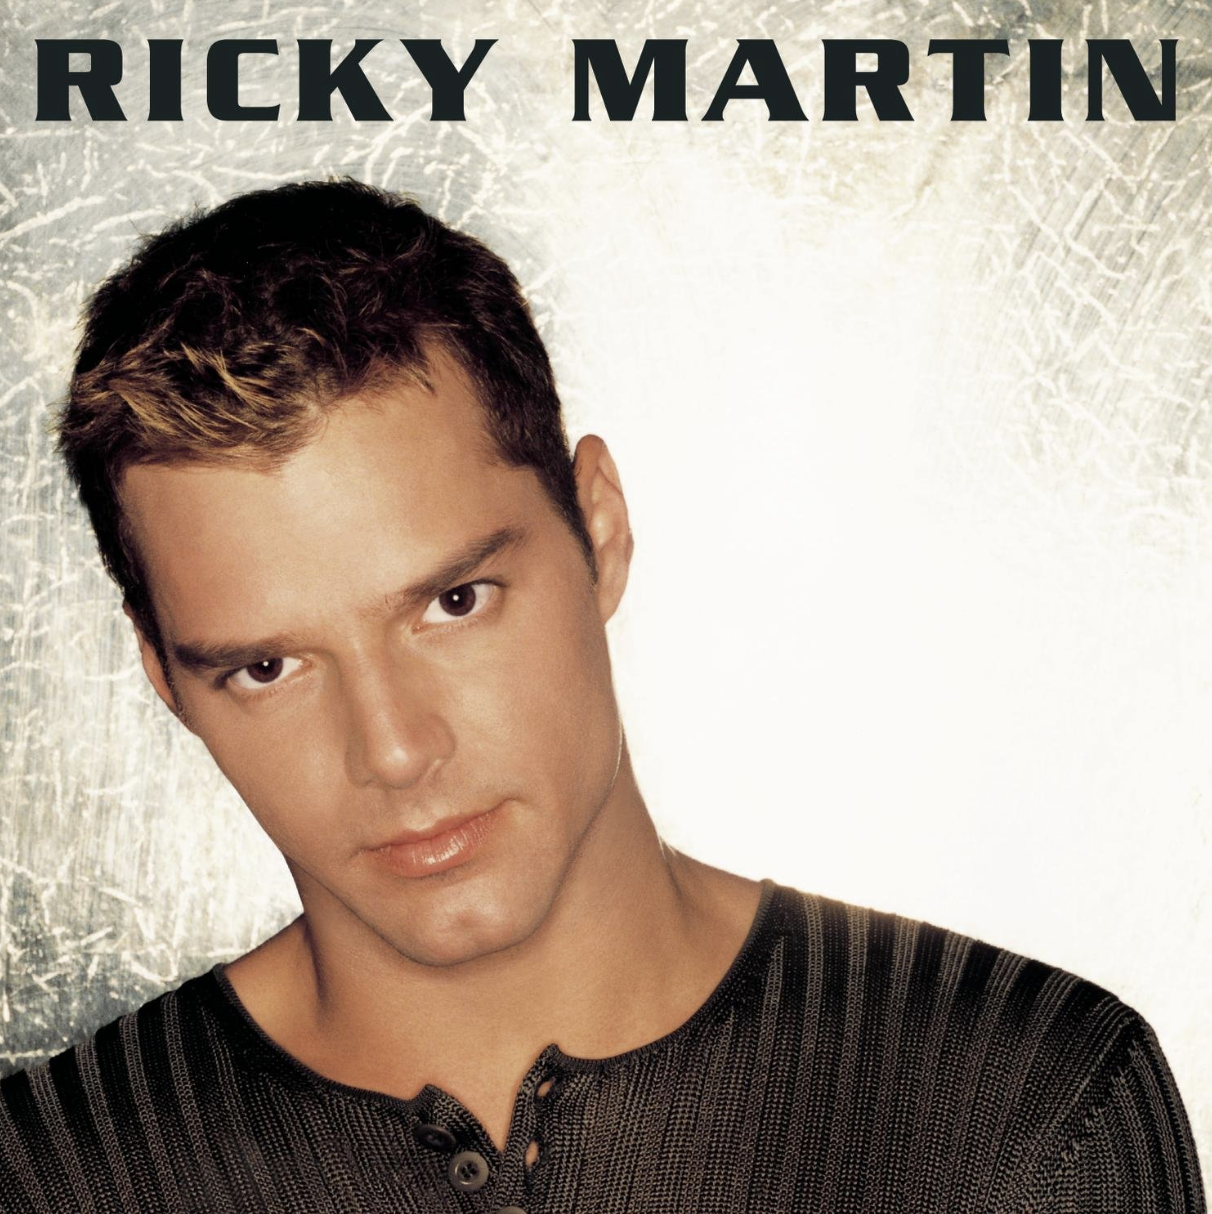 Ricky Martin's "Livin' La Vida Loca"